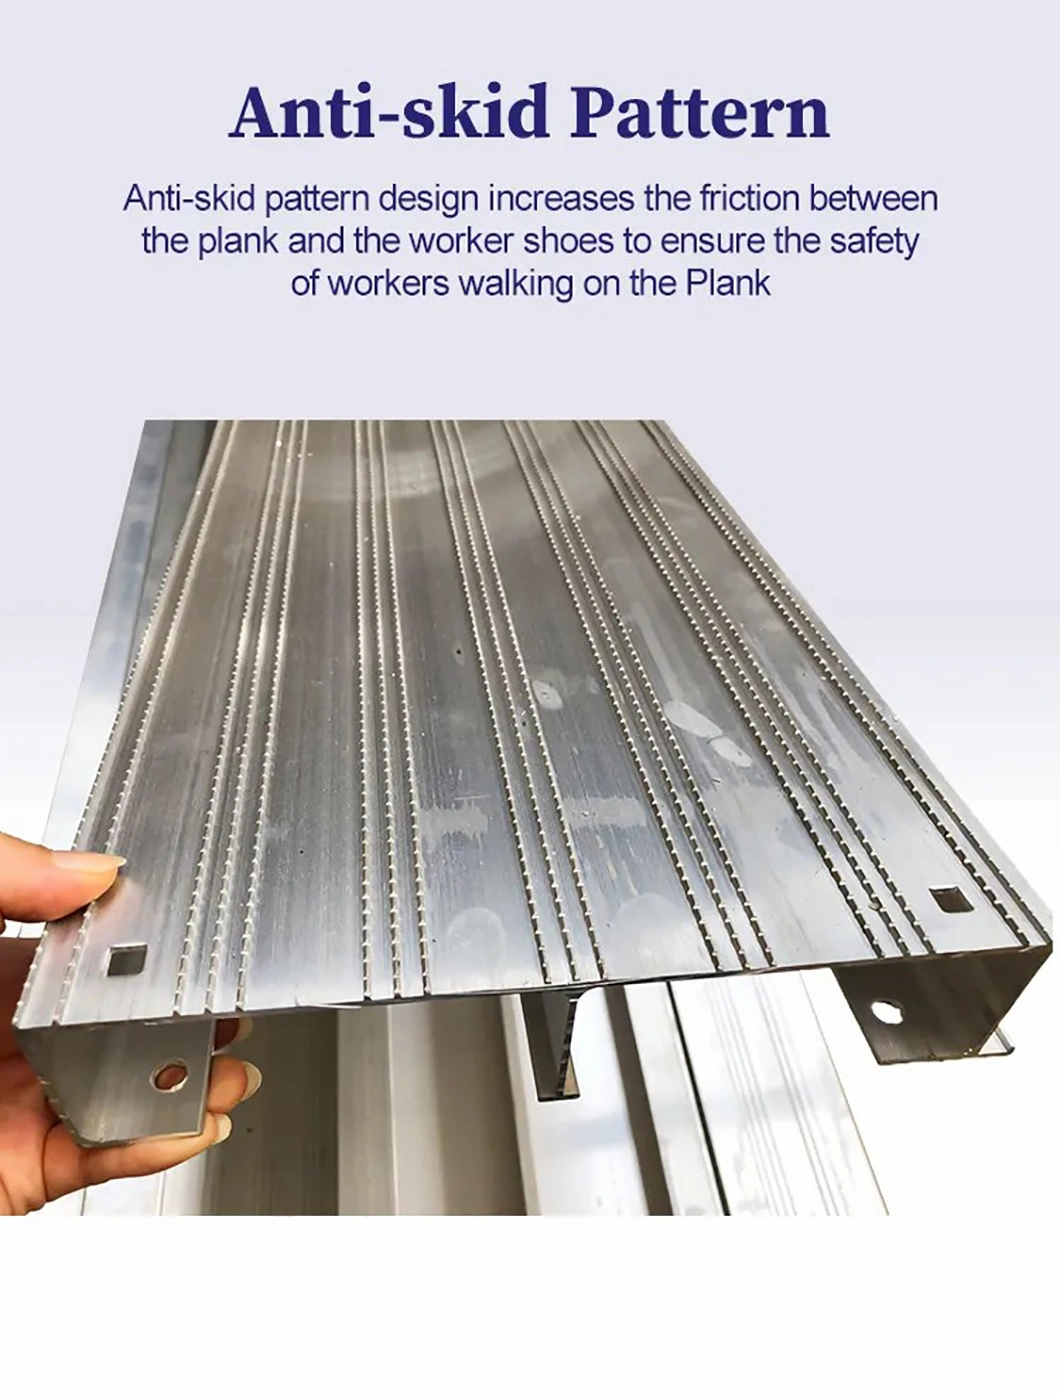 8FT Osha Aluminum Plank for Frame Scaffolding Ringlock System Scaffold